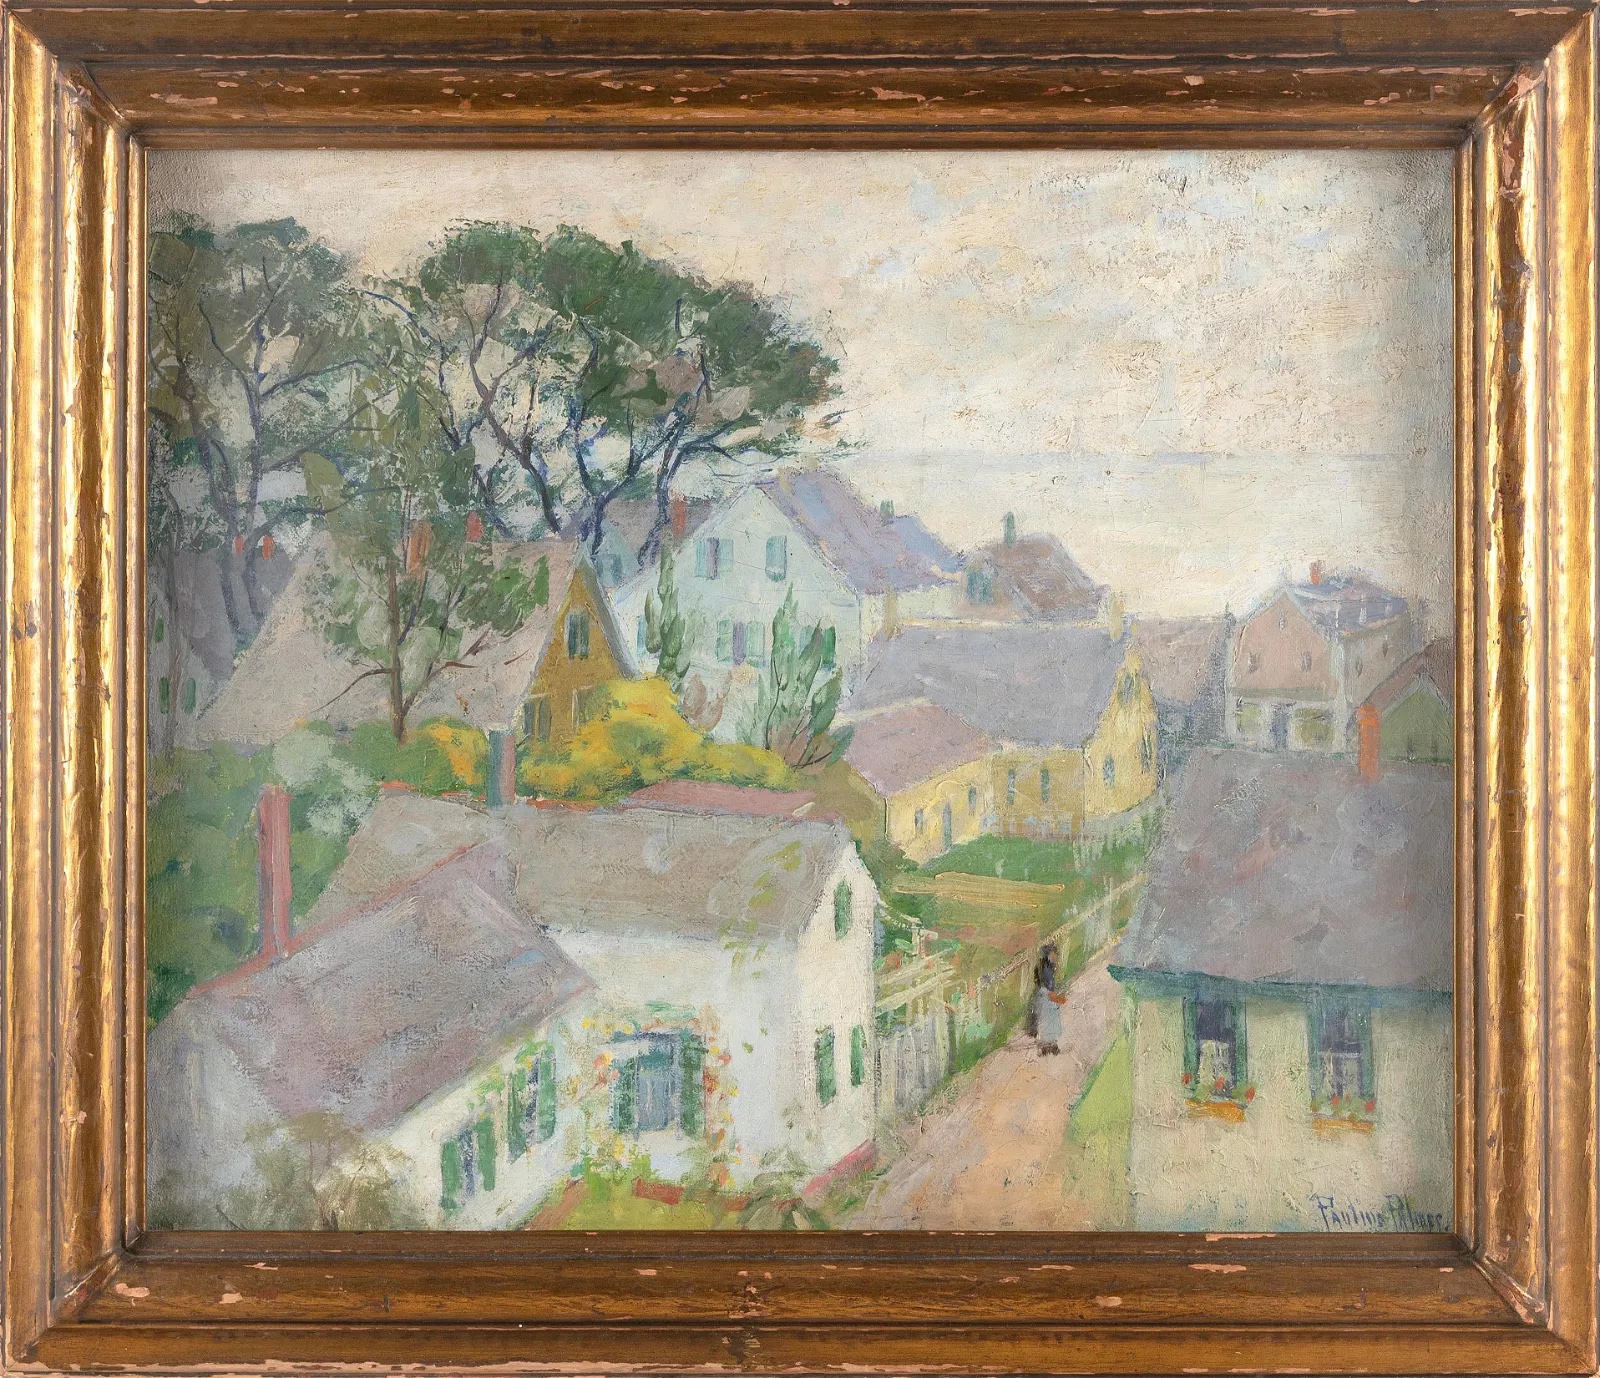 Pauline Palmer, 'Village scene, Provincetown, Massachusetts,' $3,000-$5,000 at Eldred's.